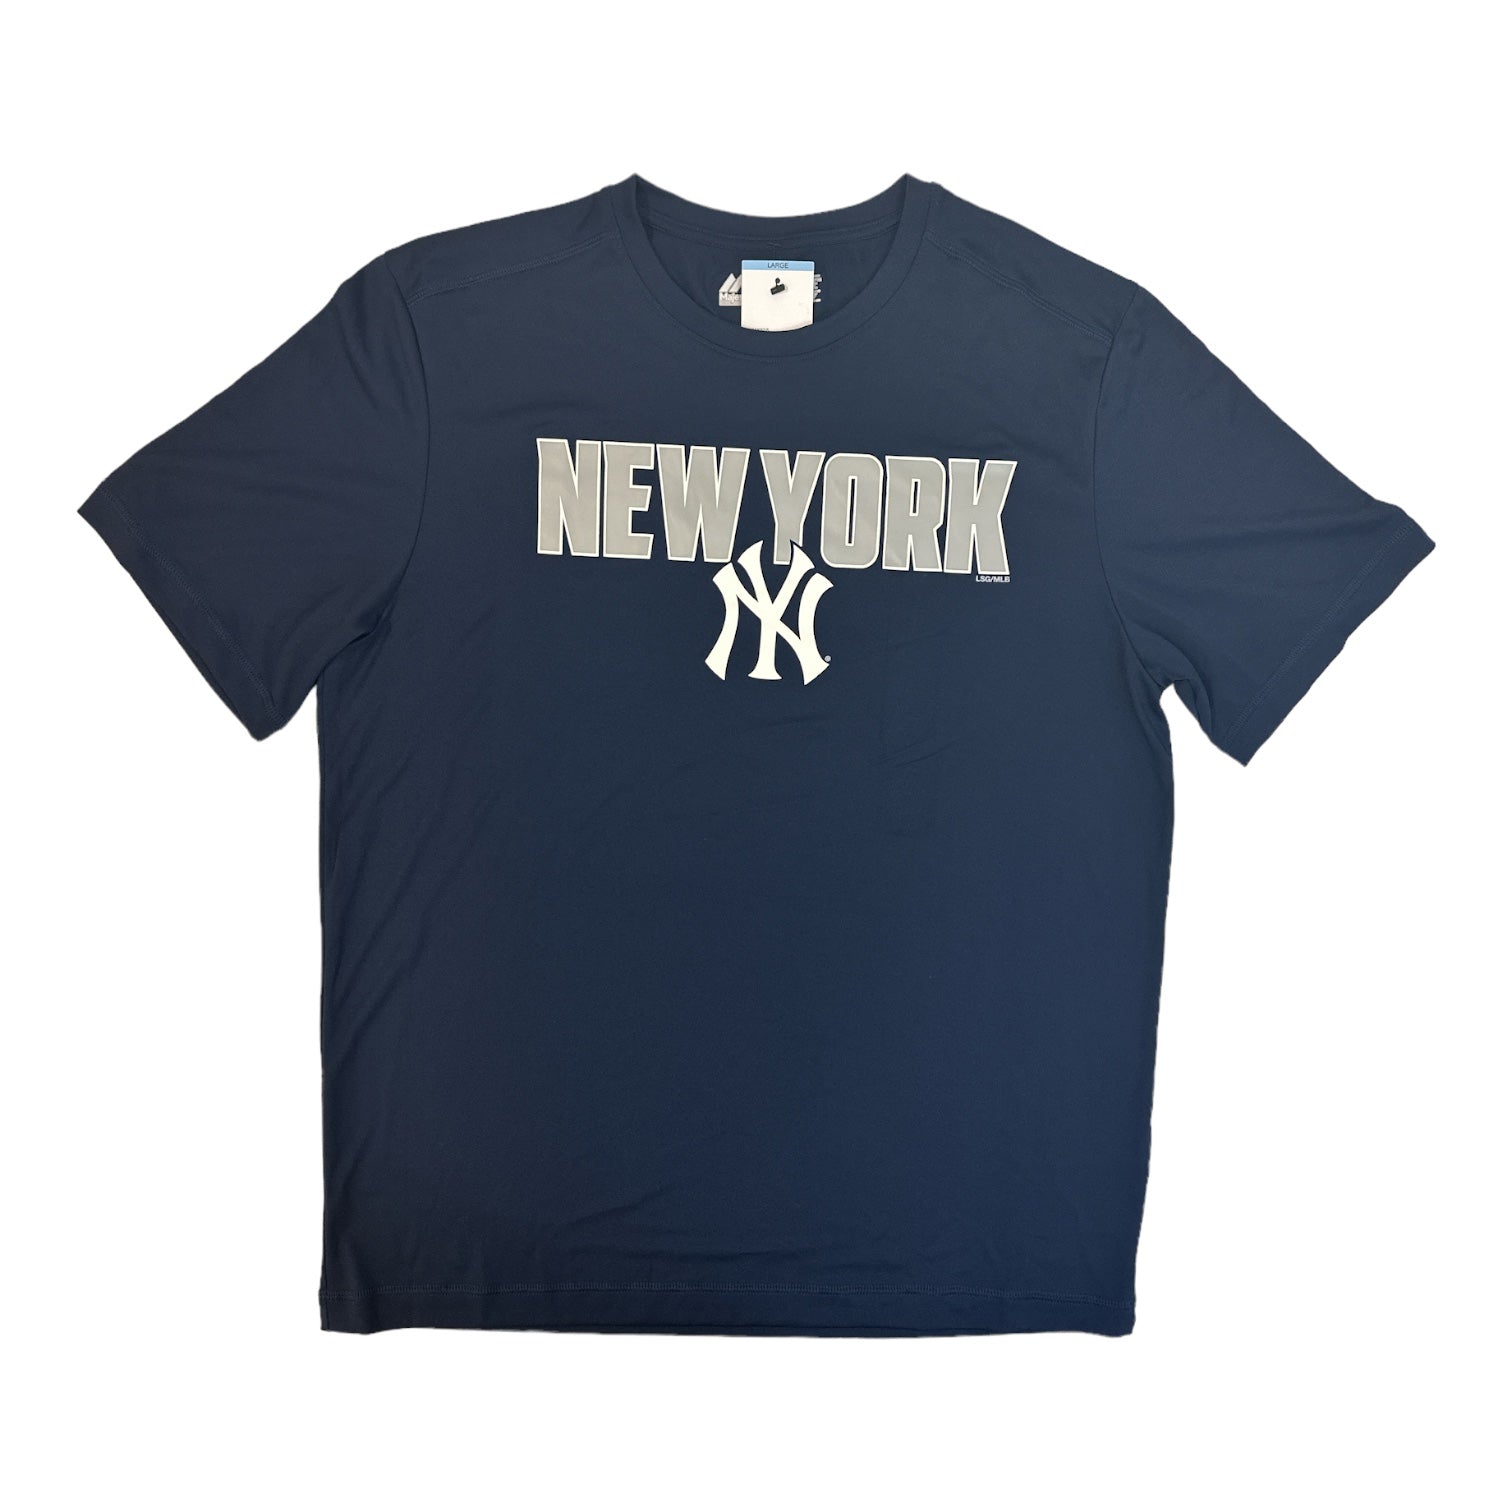 New York NY Yankees Majestic, Tee Short Sleeve Shirt Men's Sz XL